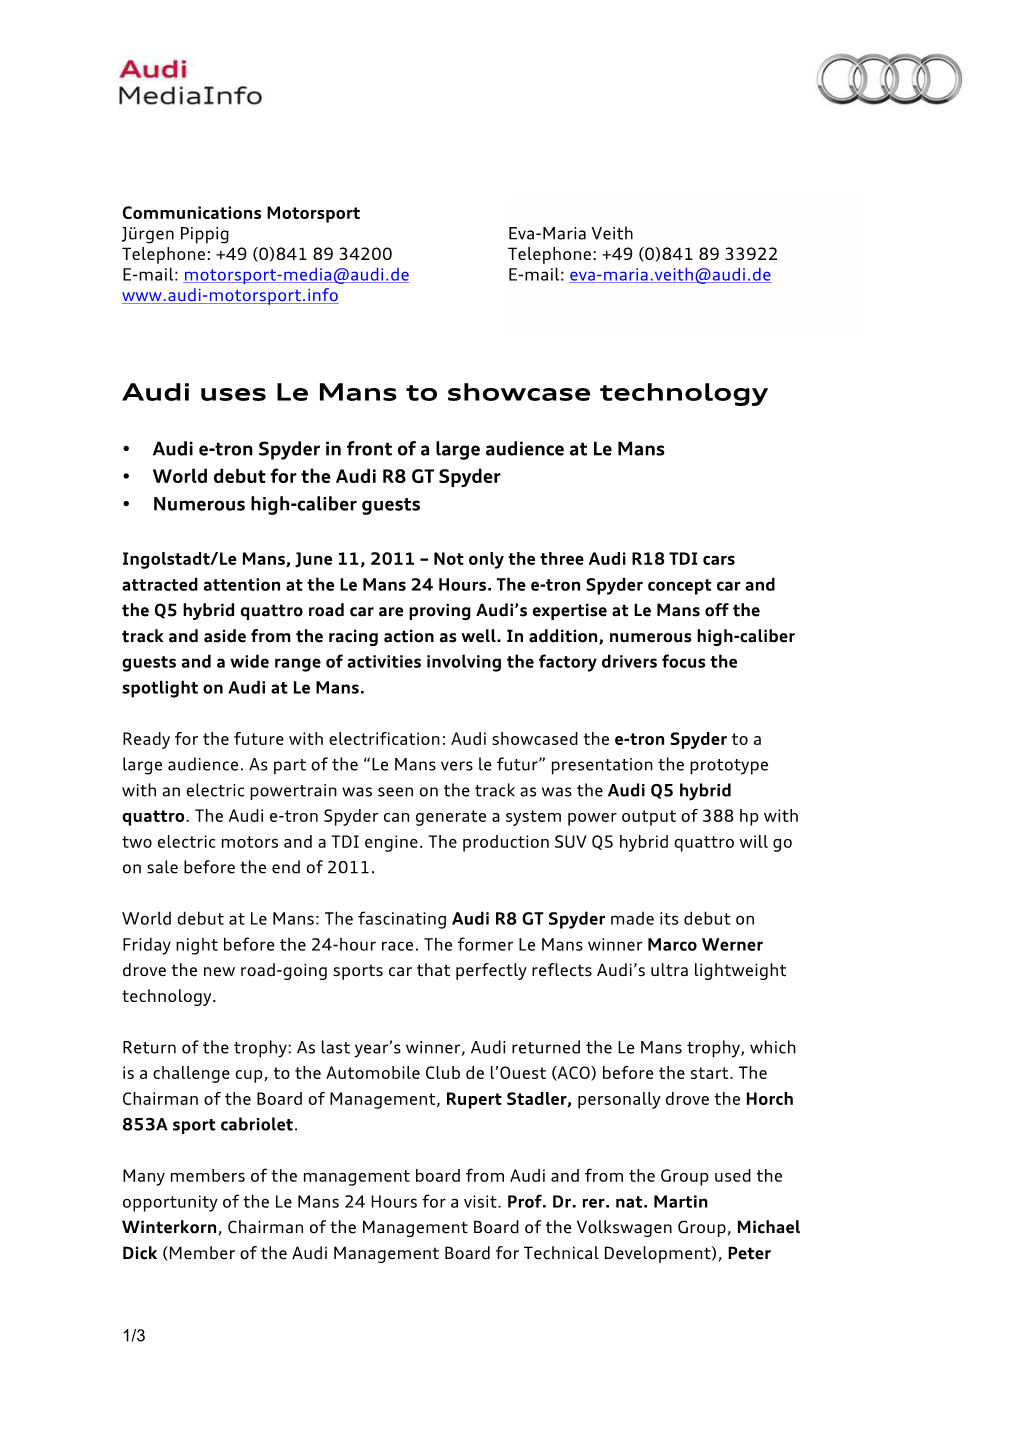 Audi Uses Le Mans to Showcase Technology